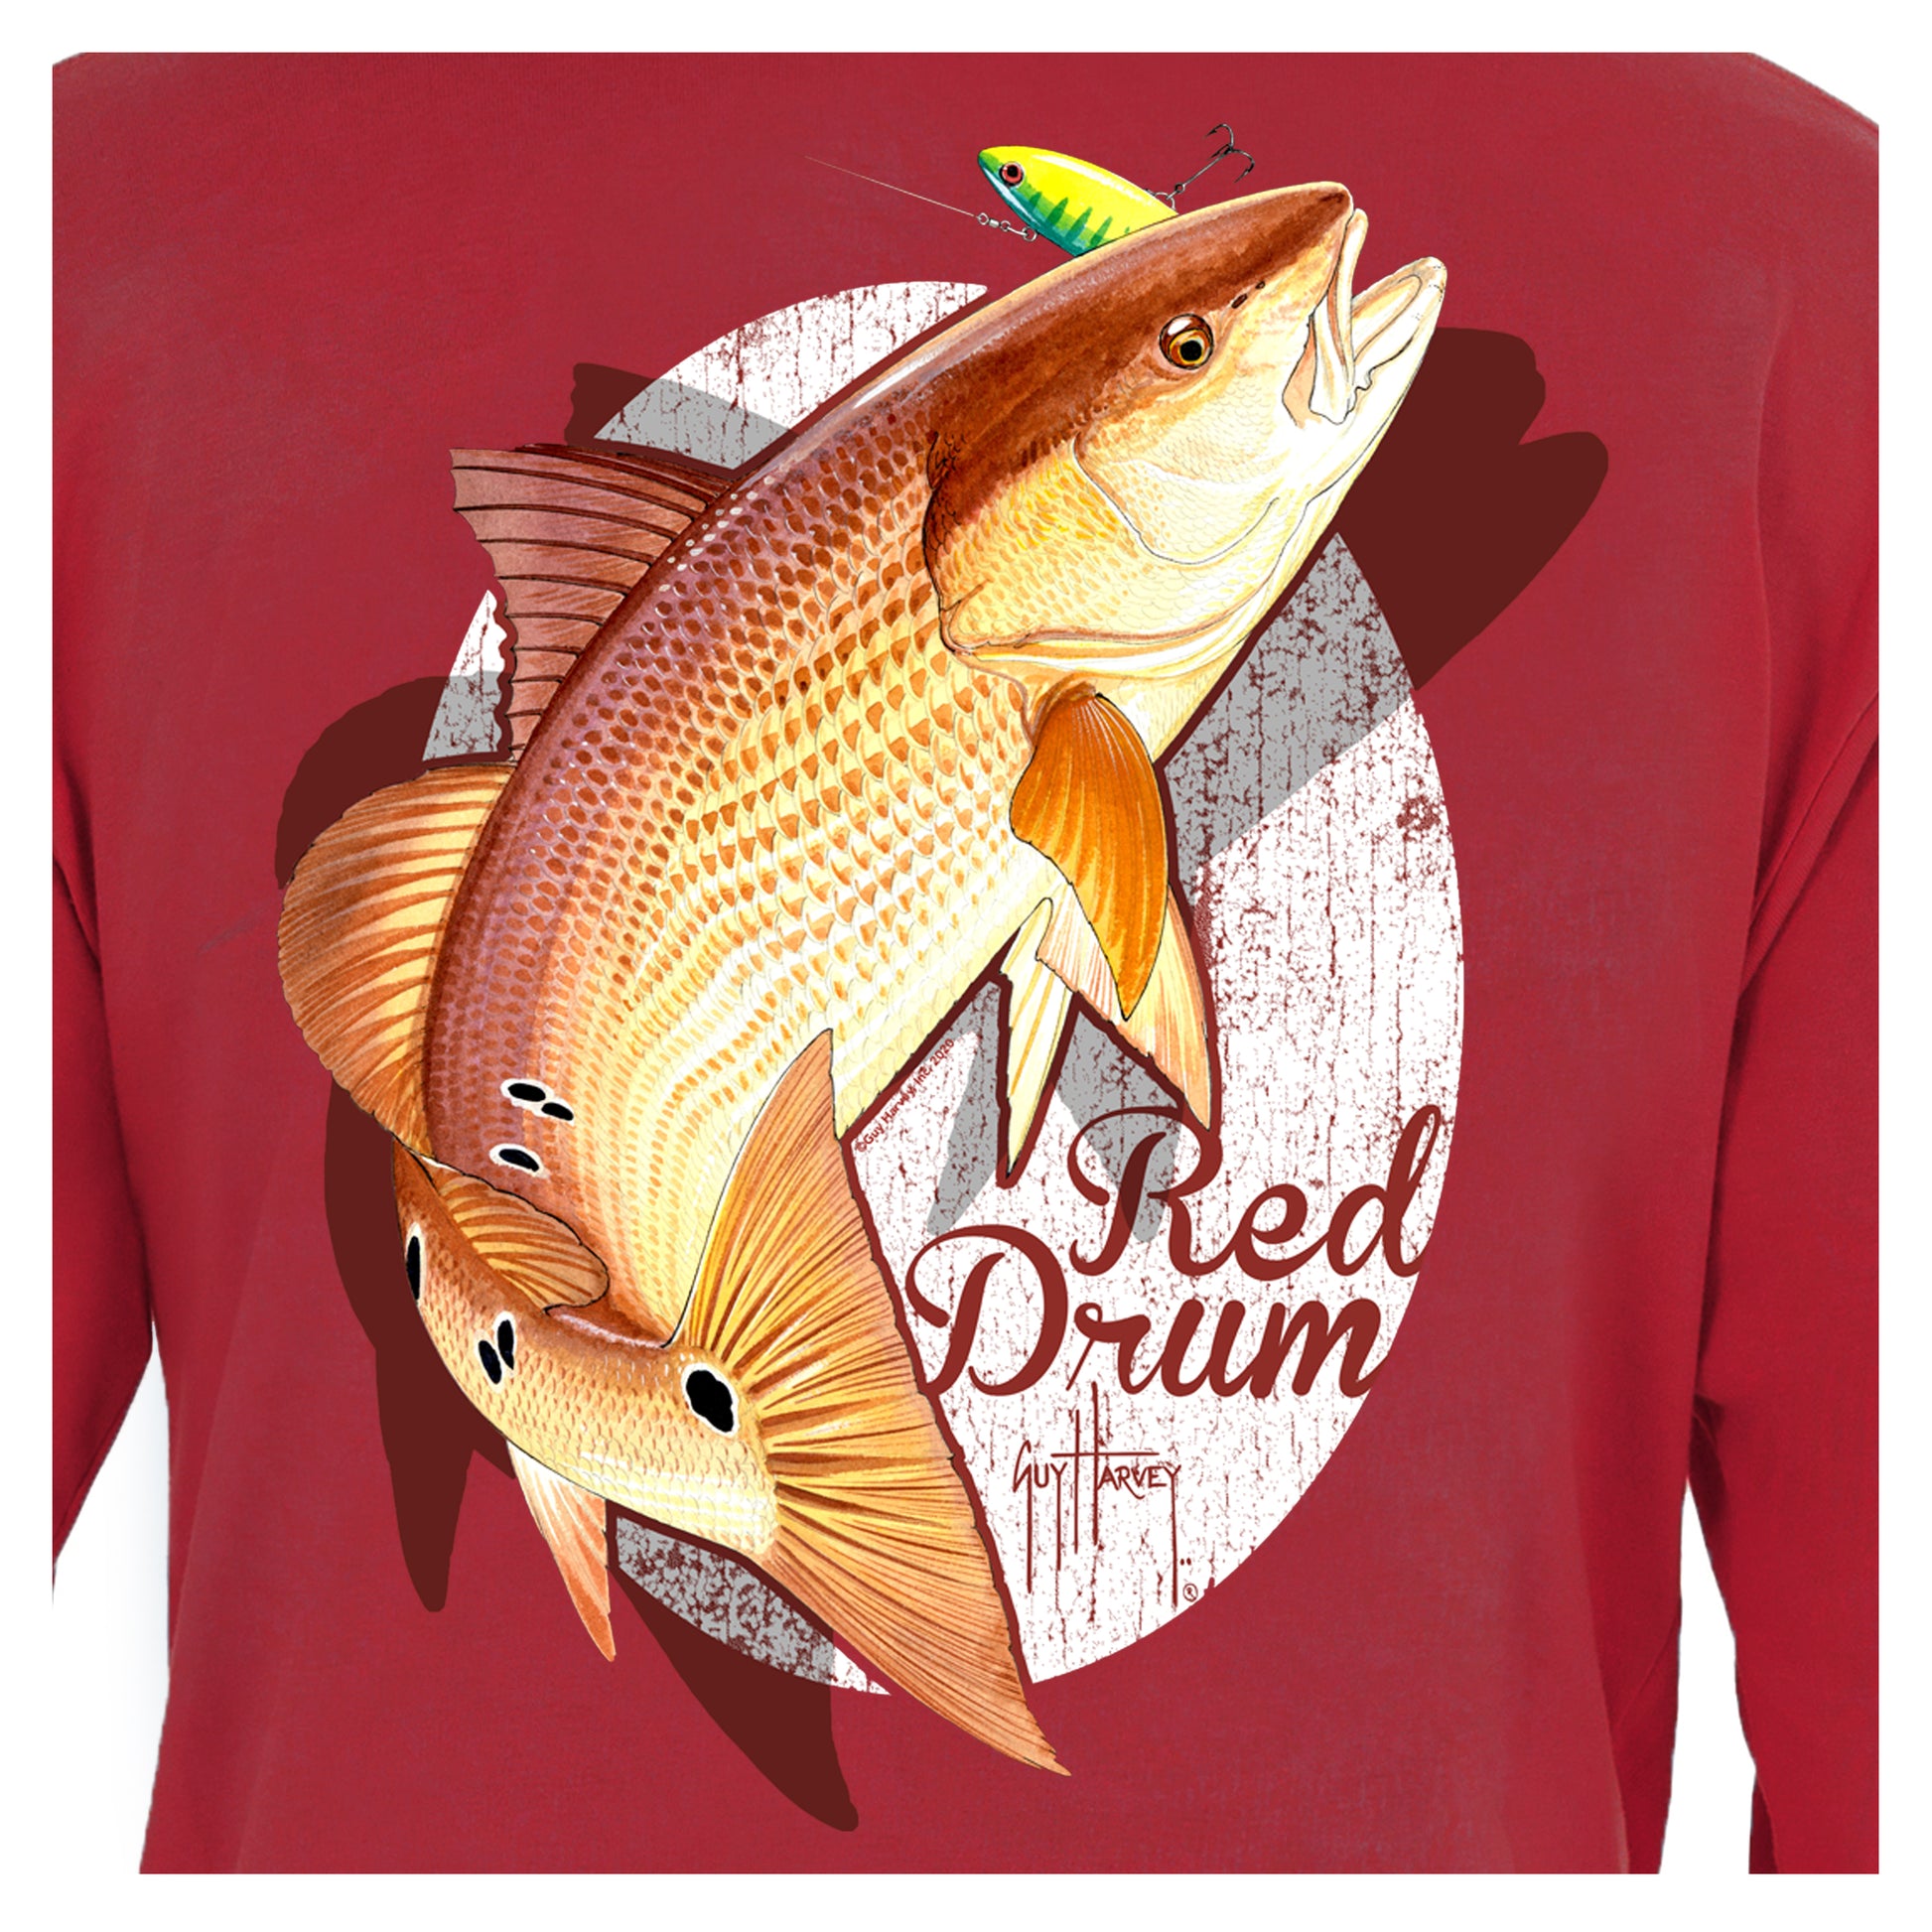 Fair Game Redfish Fishing T-Shirt, red drum, Fishing Graphic Tee